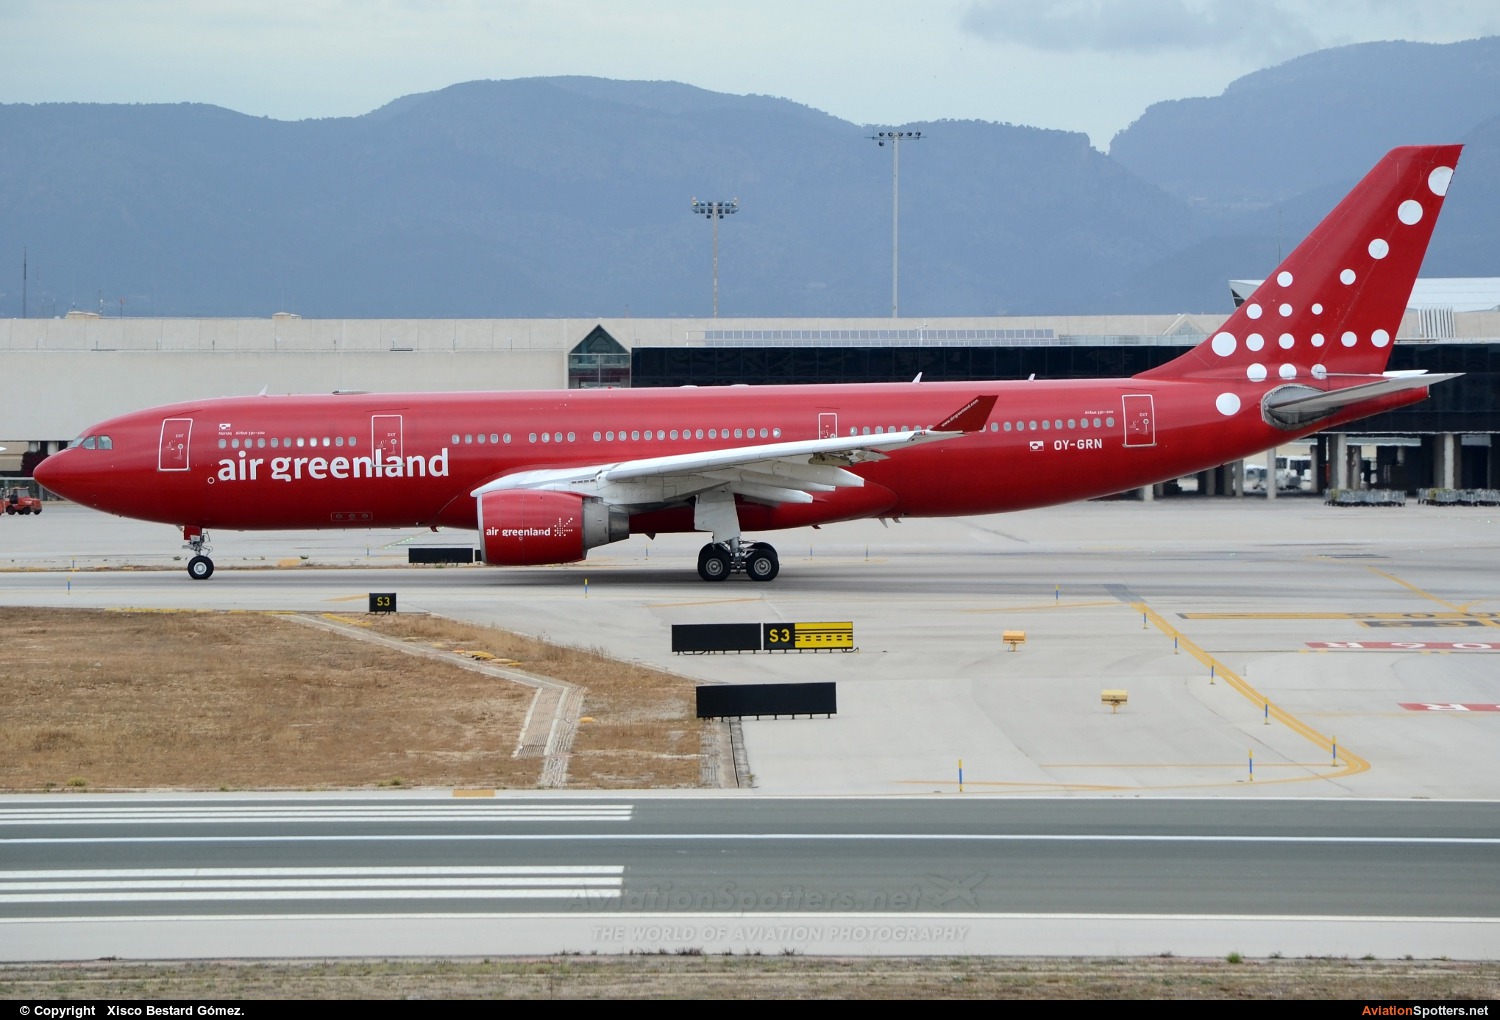 Air Greenland  -  A330-200  (OY-GRN) By Xisco Bestard Gómez. (xiscobestard)